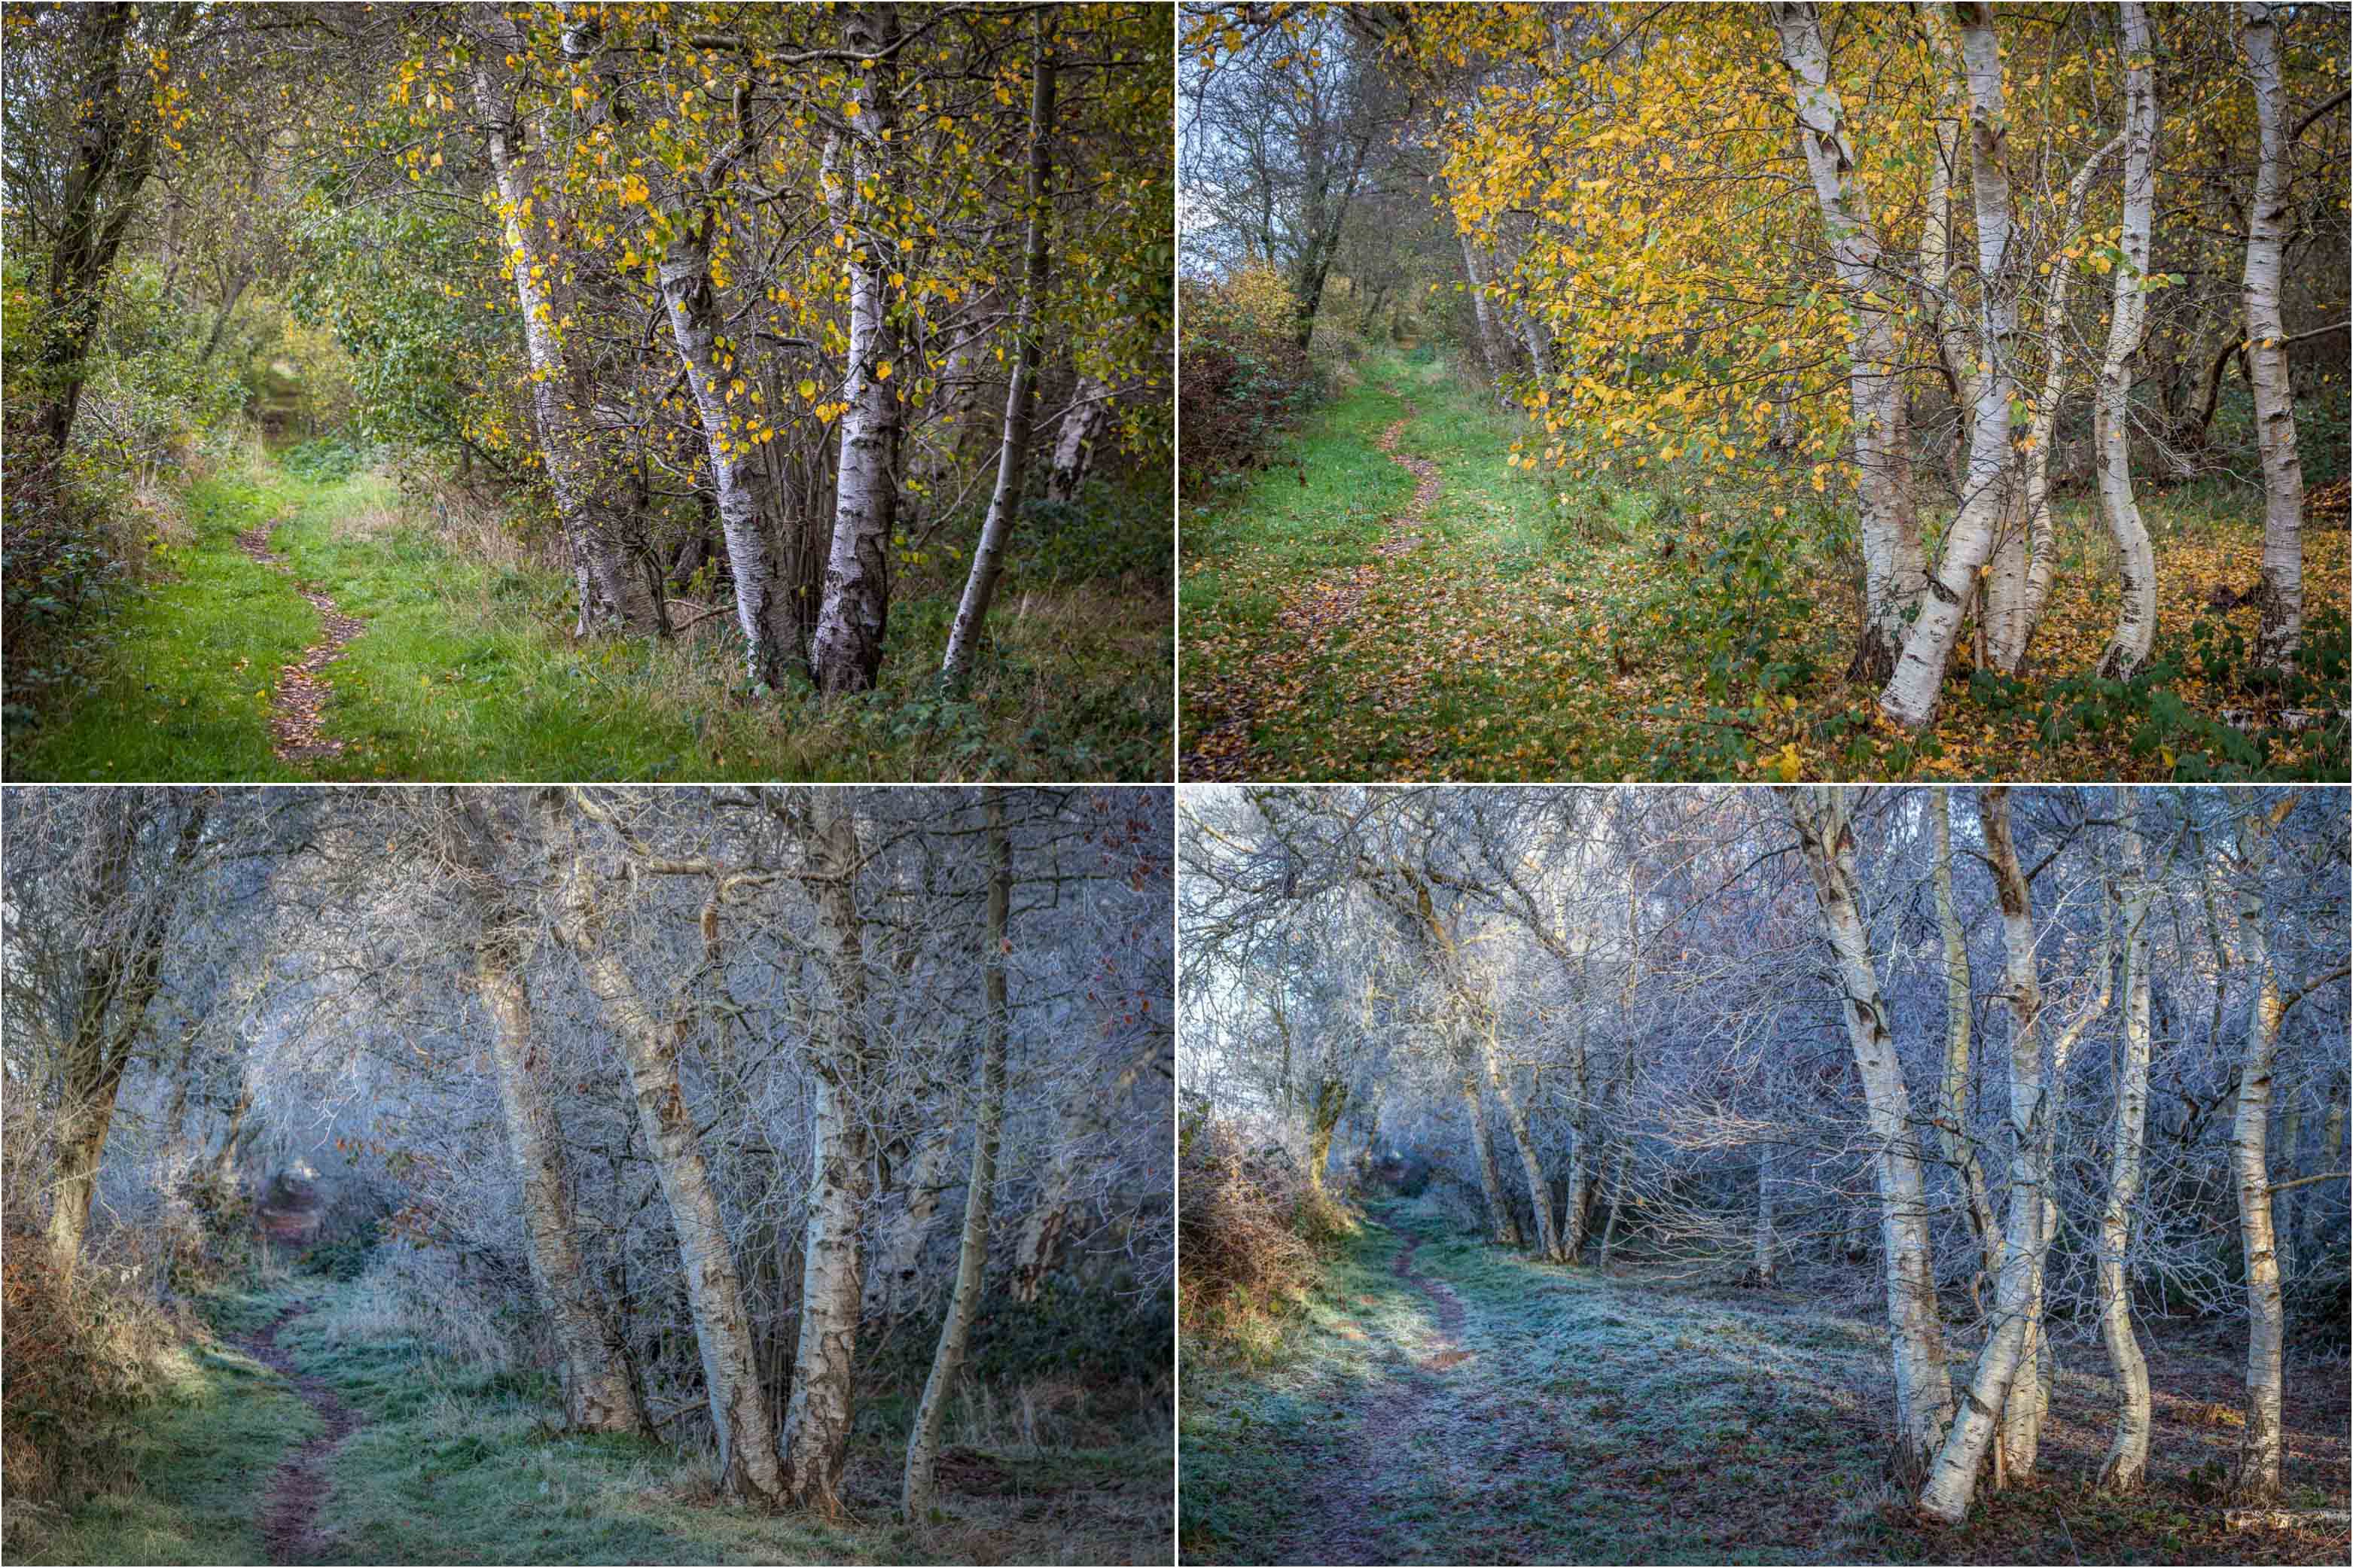 North Cliffe Wood, autumn, winter